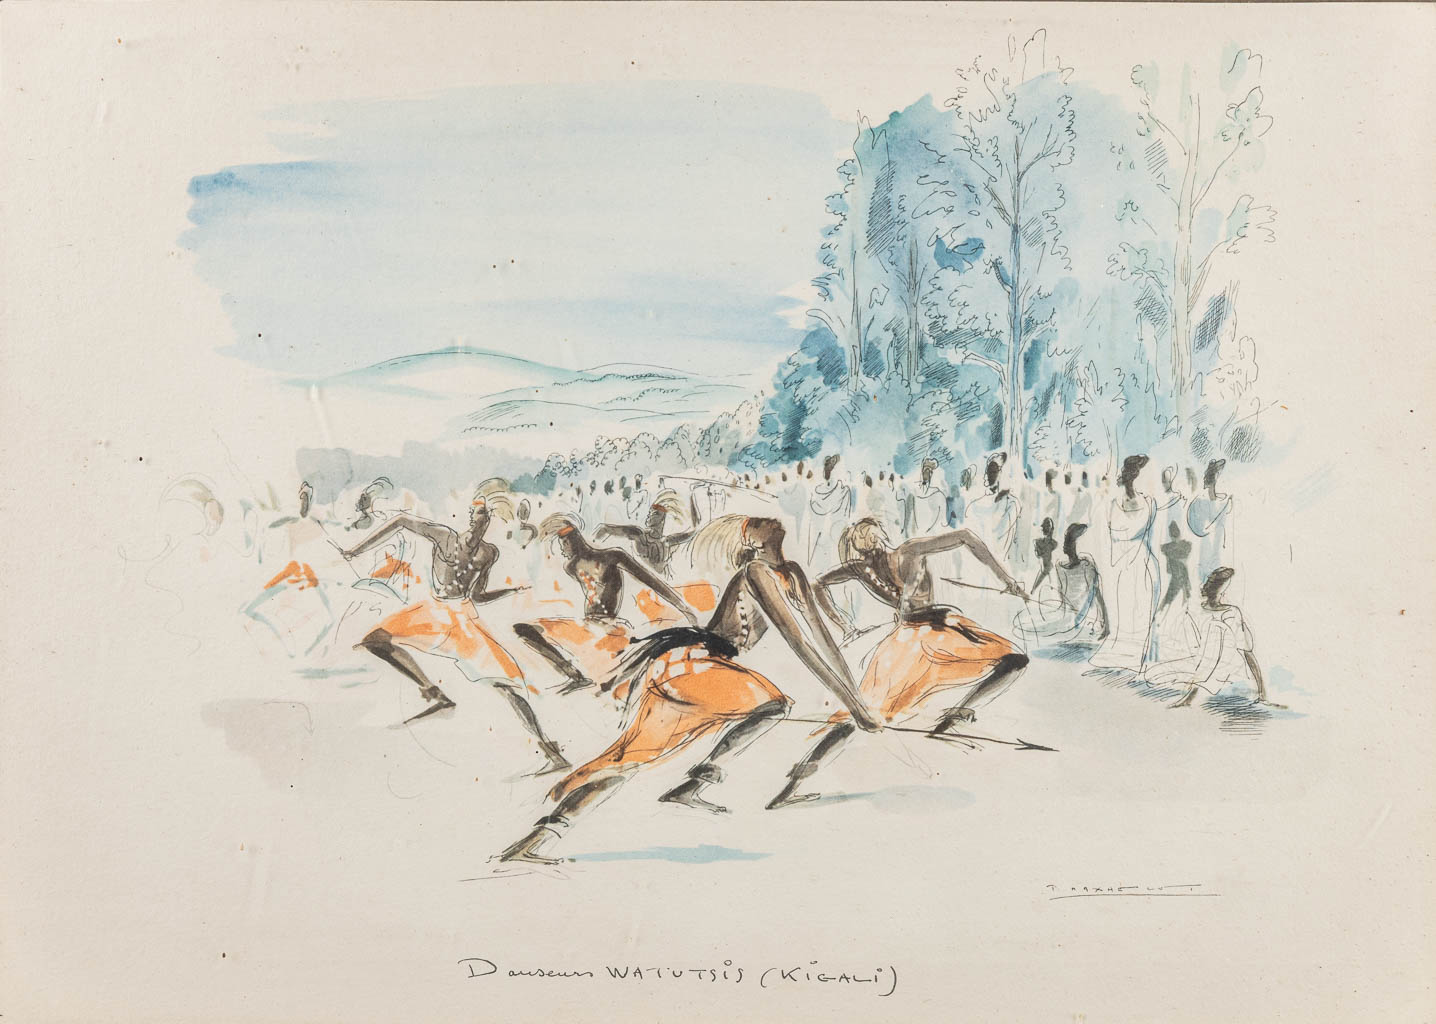 Paul DAXHELET (1905-1993) 'Danseurs Watutsis (Kigali)', Watercolor on paper. (35 x 25 cm)